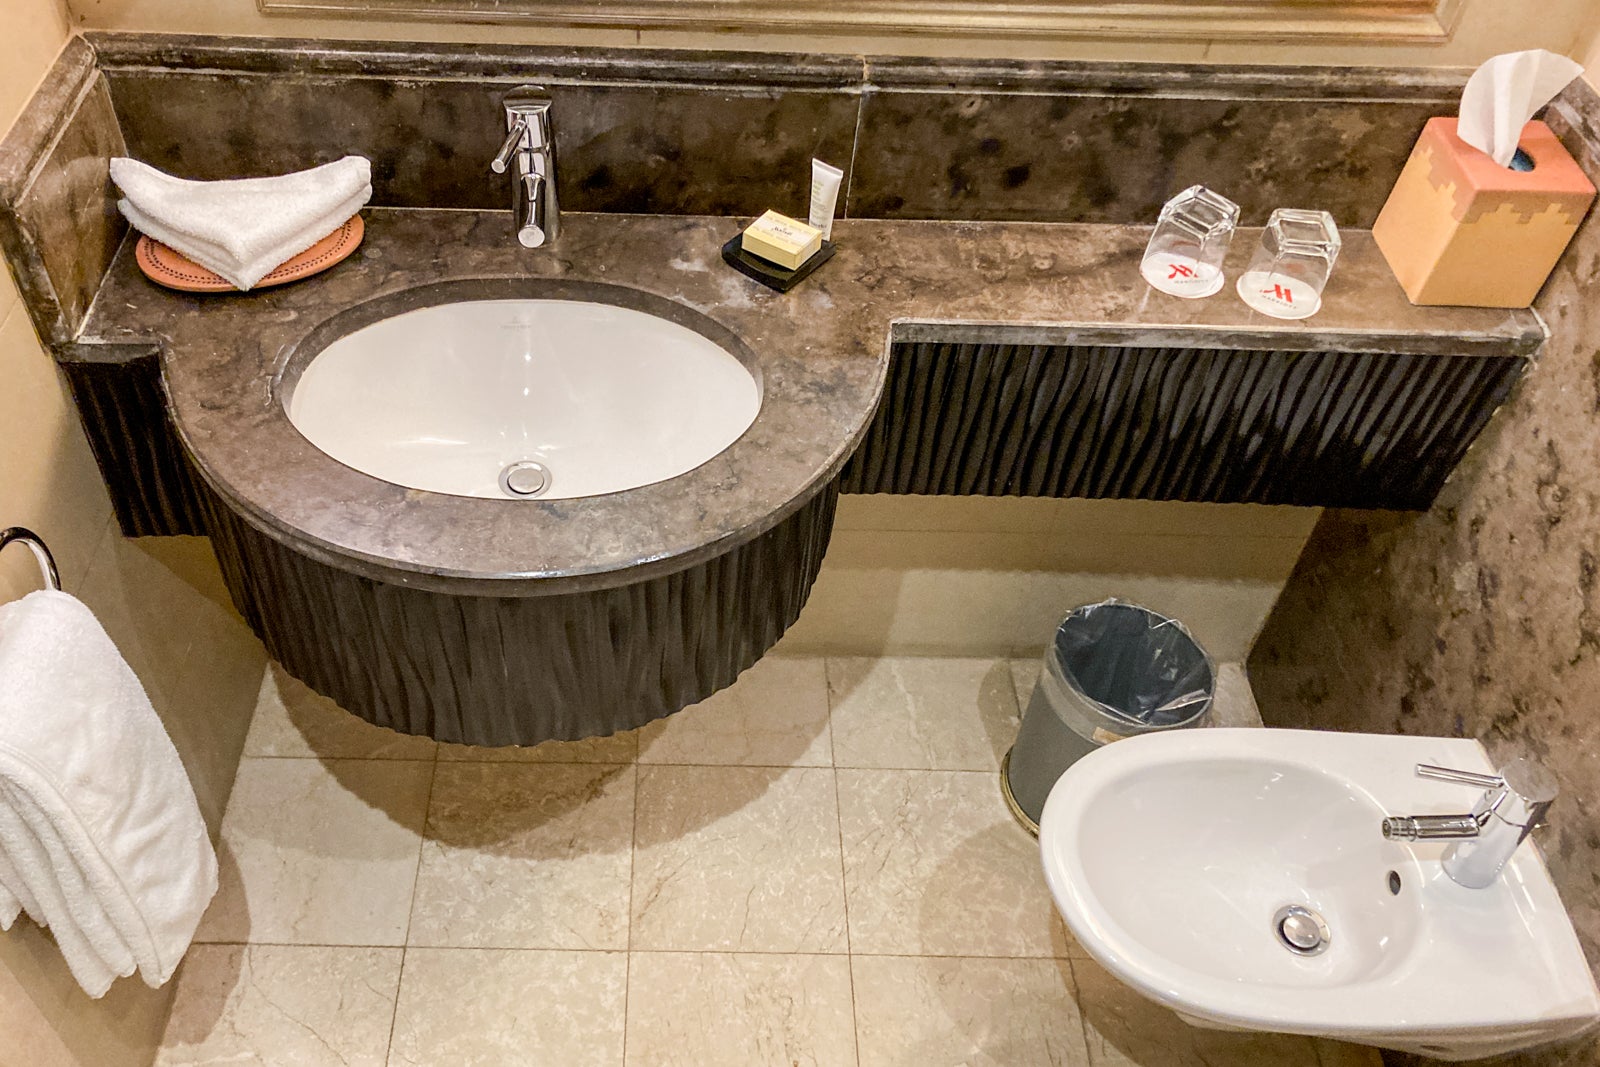 the sink, toiletries and bidet in a hotel bathroom